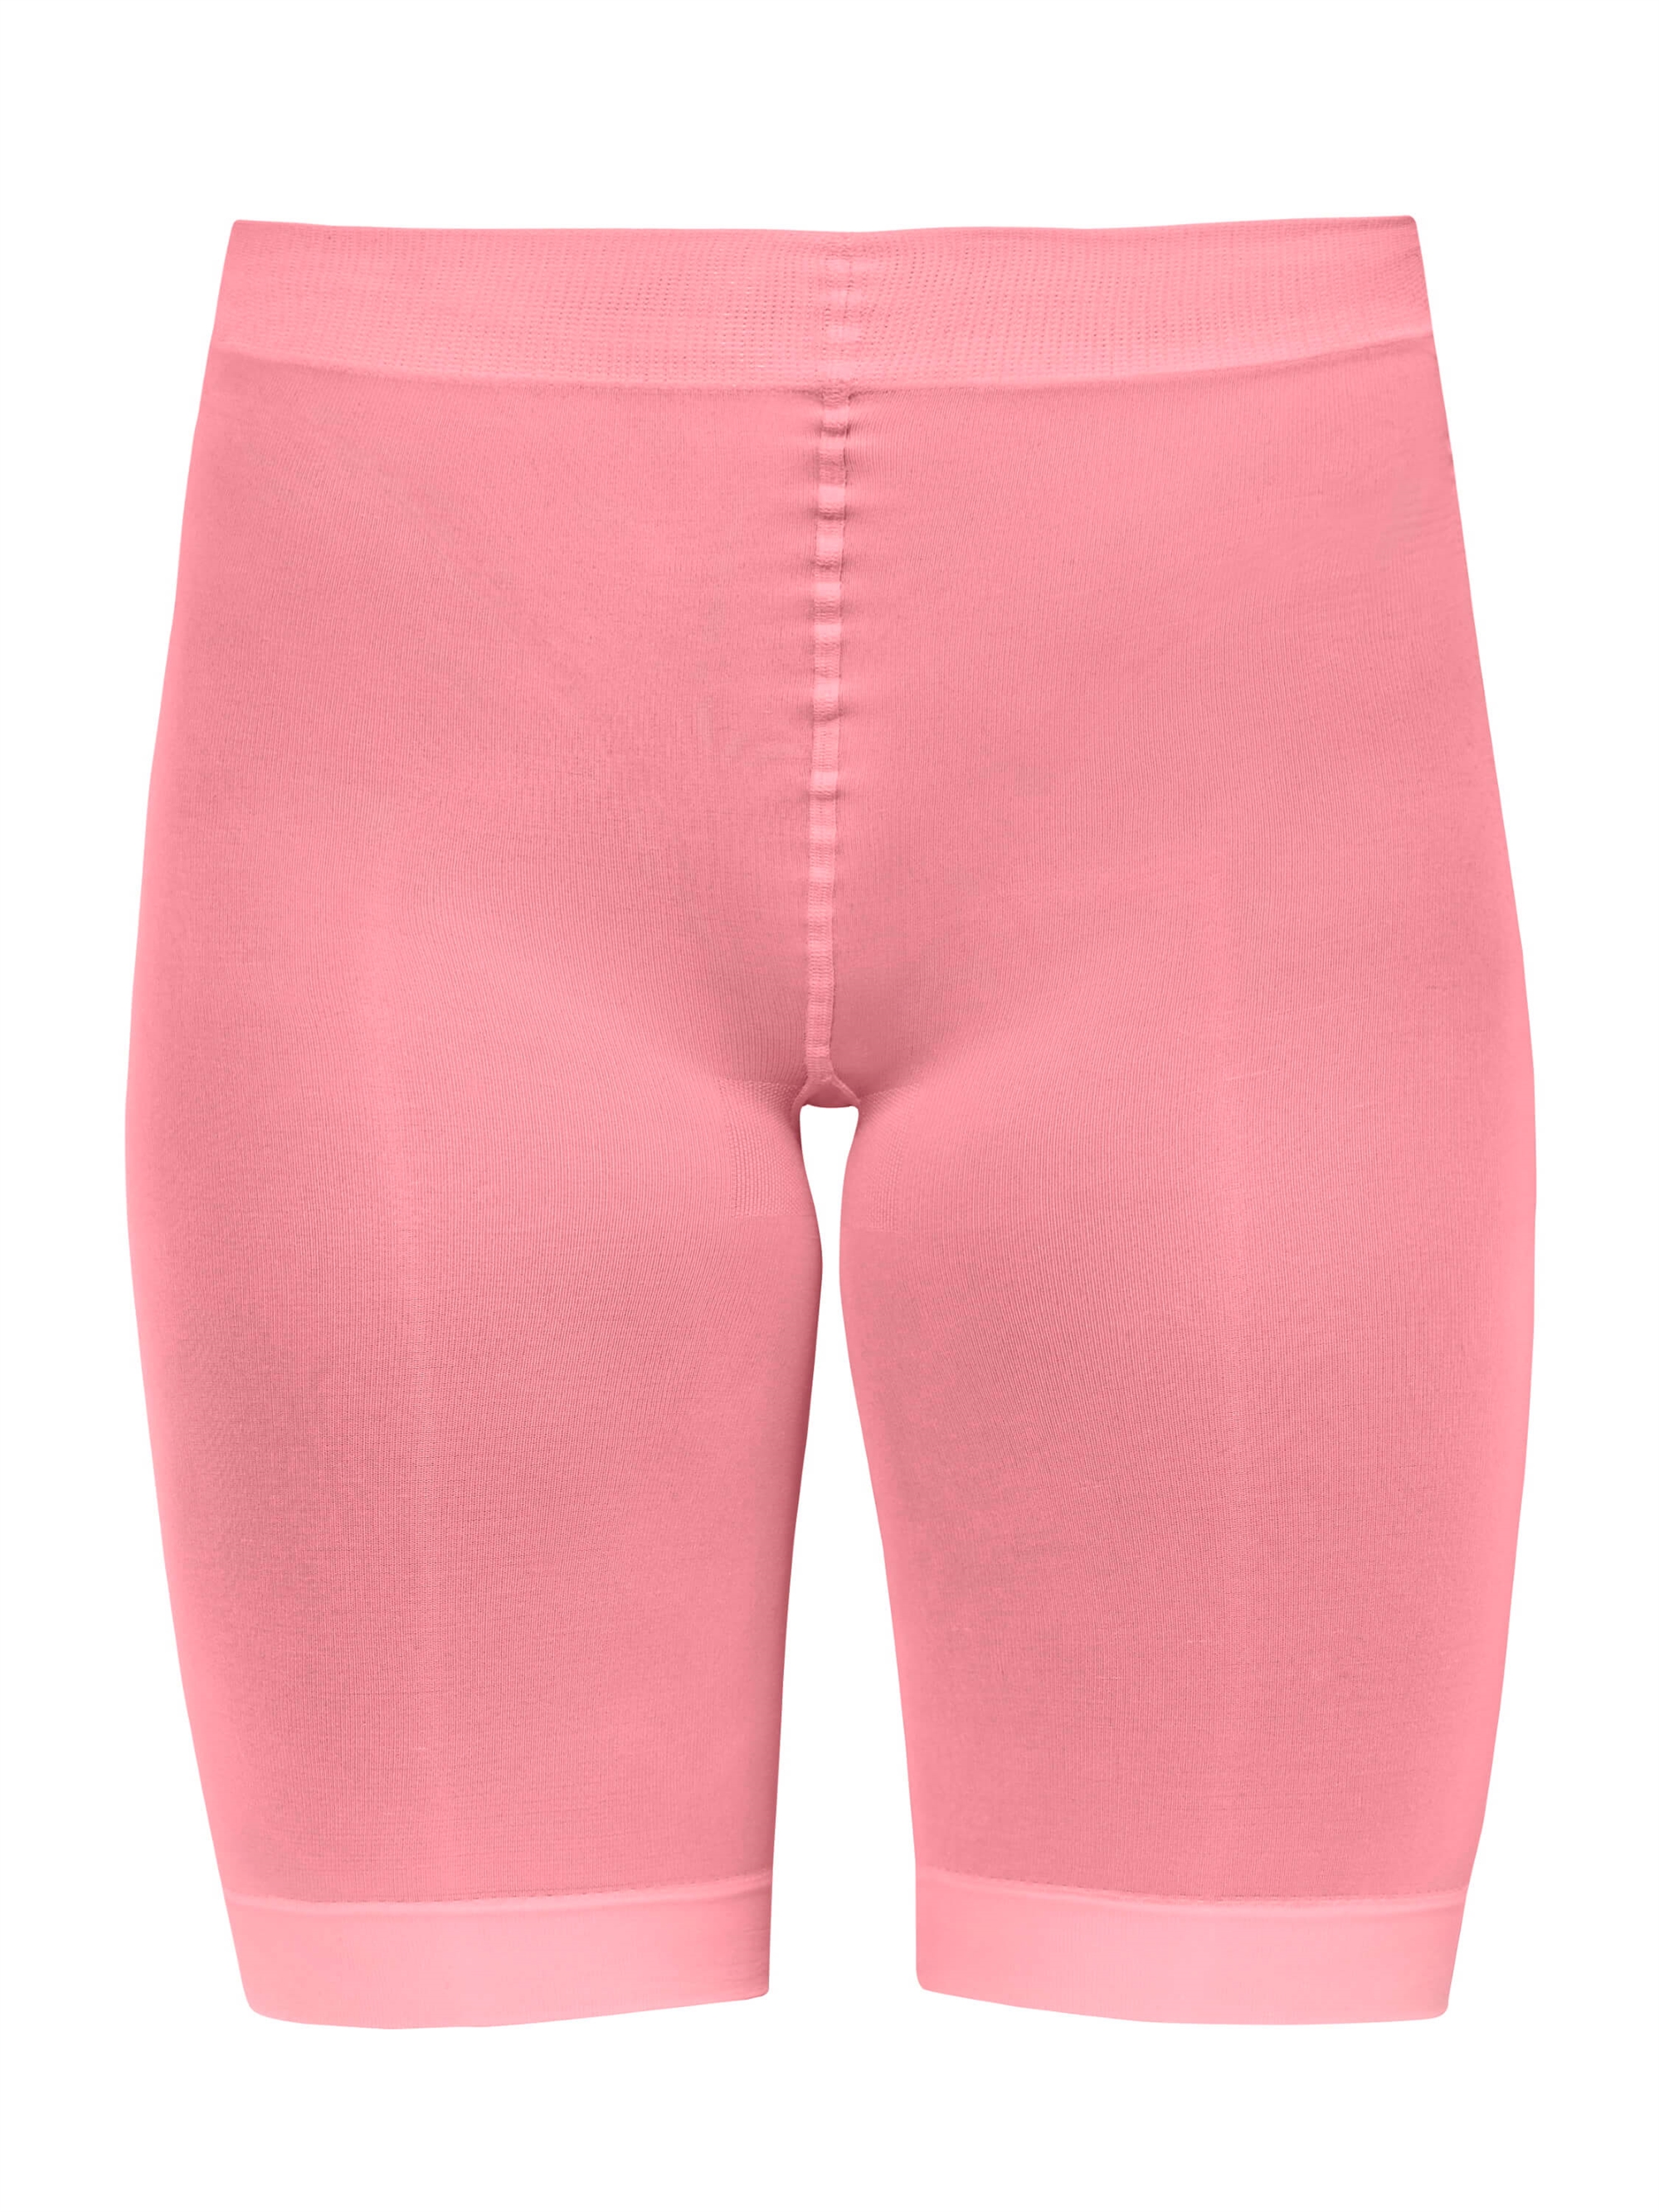 Kristendom Delegeret efterskrift Sneaky Fox - shorts - Micro Shorts - 9 farver - 79,00 DKK